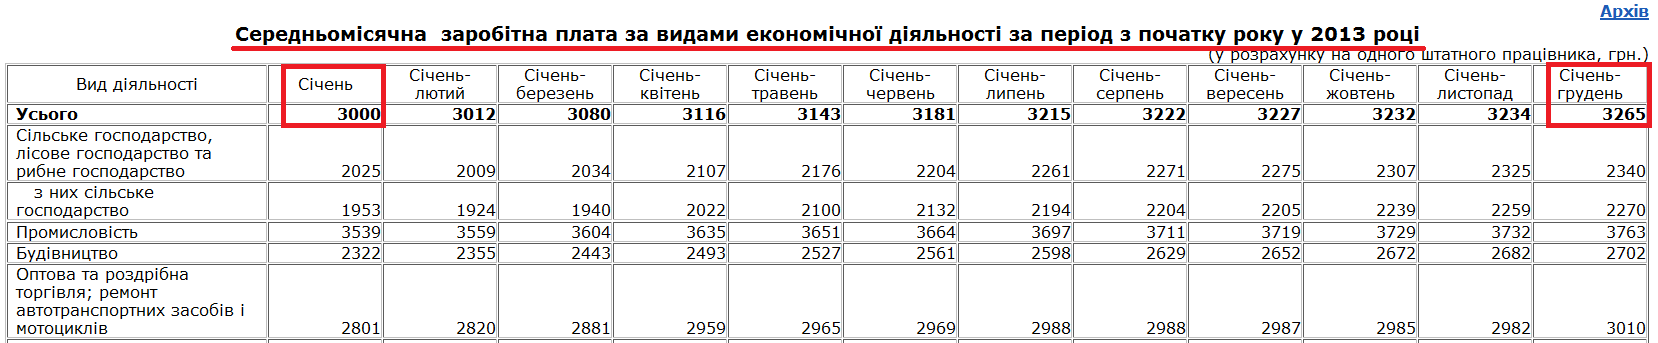 http://www.ukrstat.gov.ua/operativ/operativ2013/gdn/Zarp_ek_p/zpp2013_u.htm